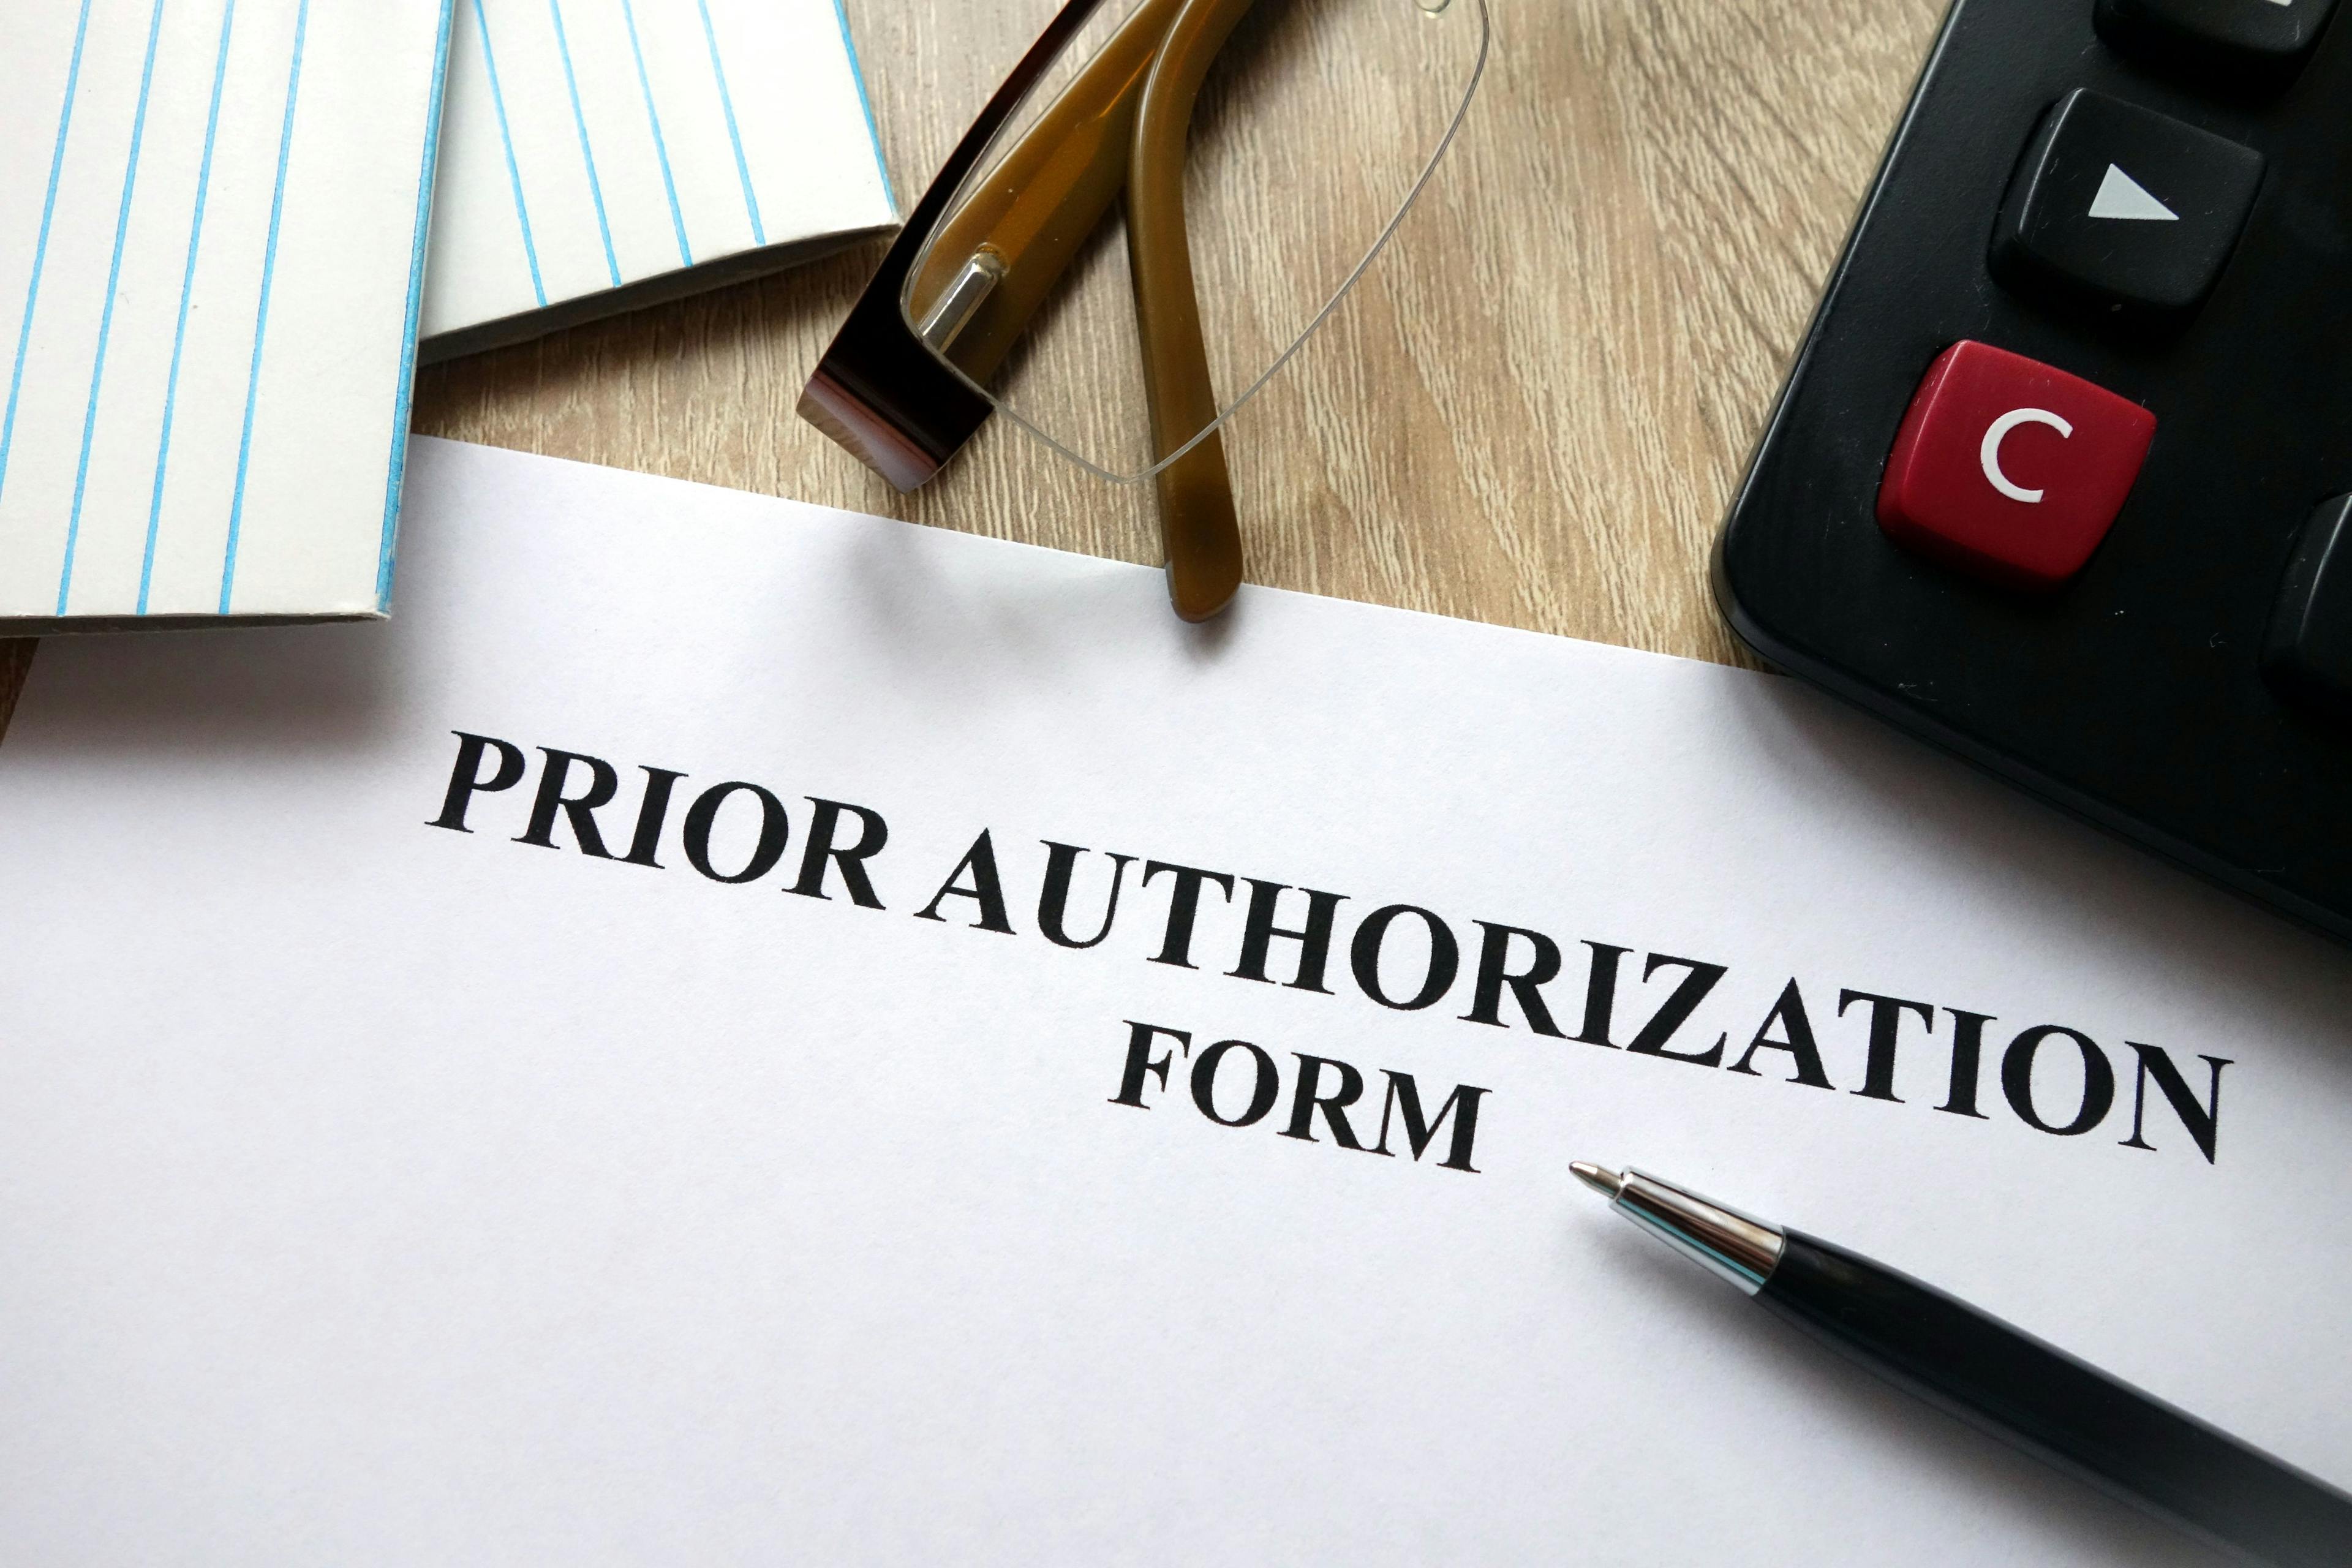 Prior authorization reform: ©Piter2121 - stock.adobe.com